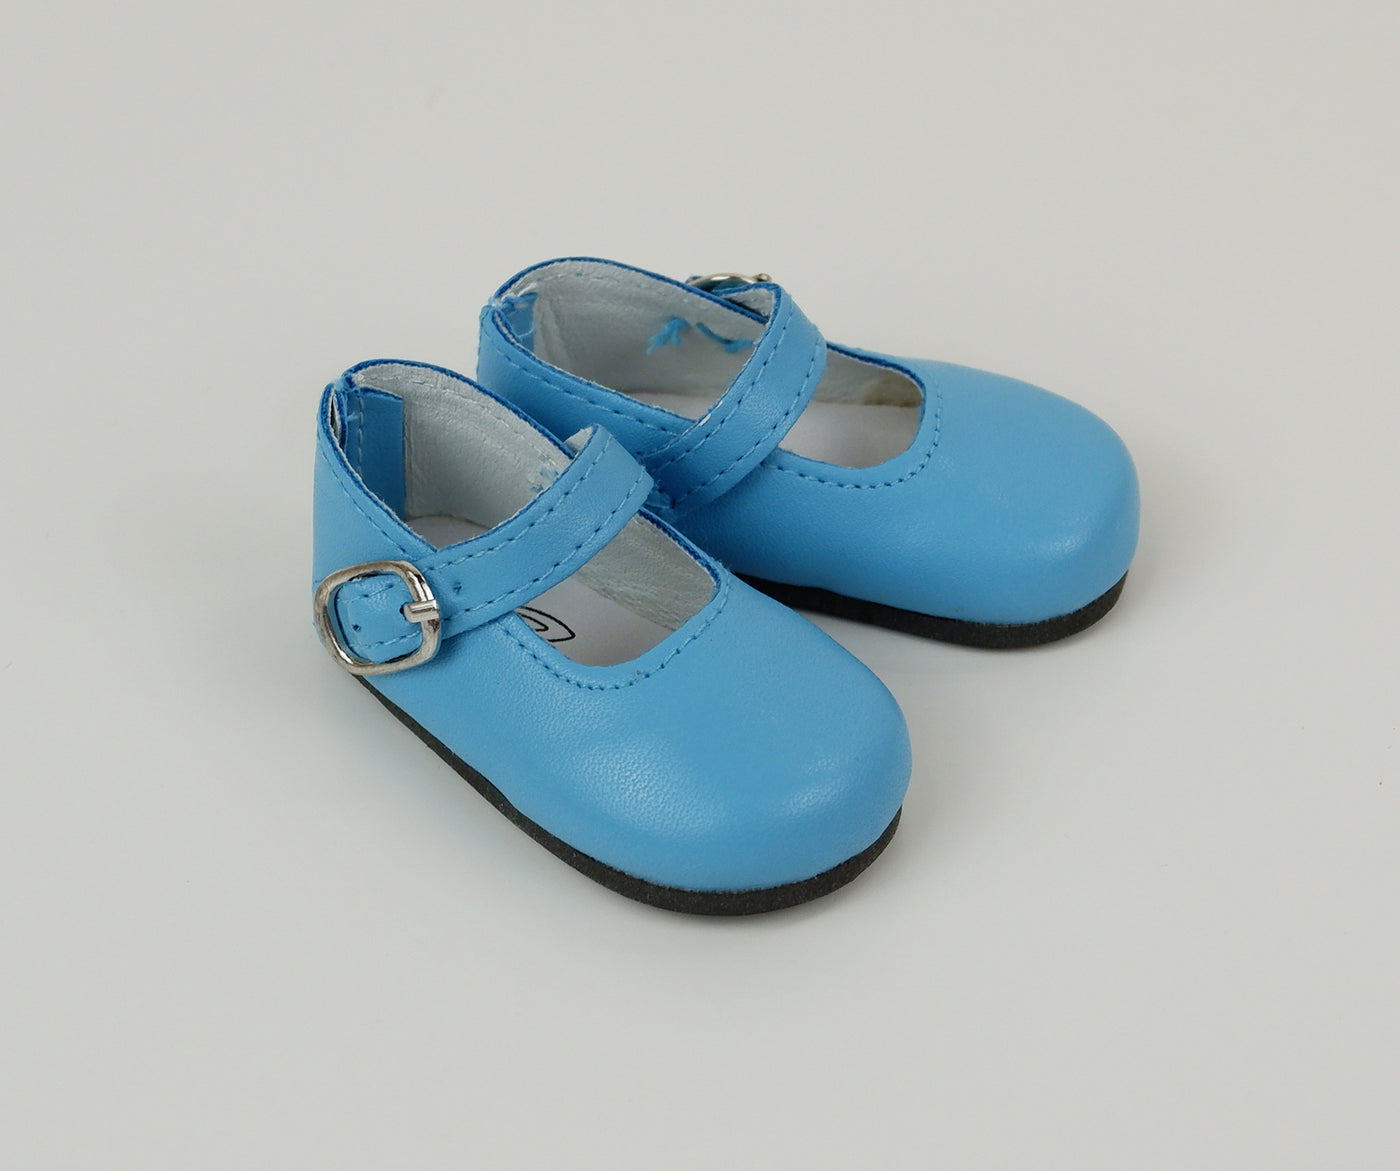 Simple Mary Jane Shoes - Dutch Blue